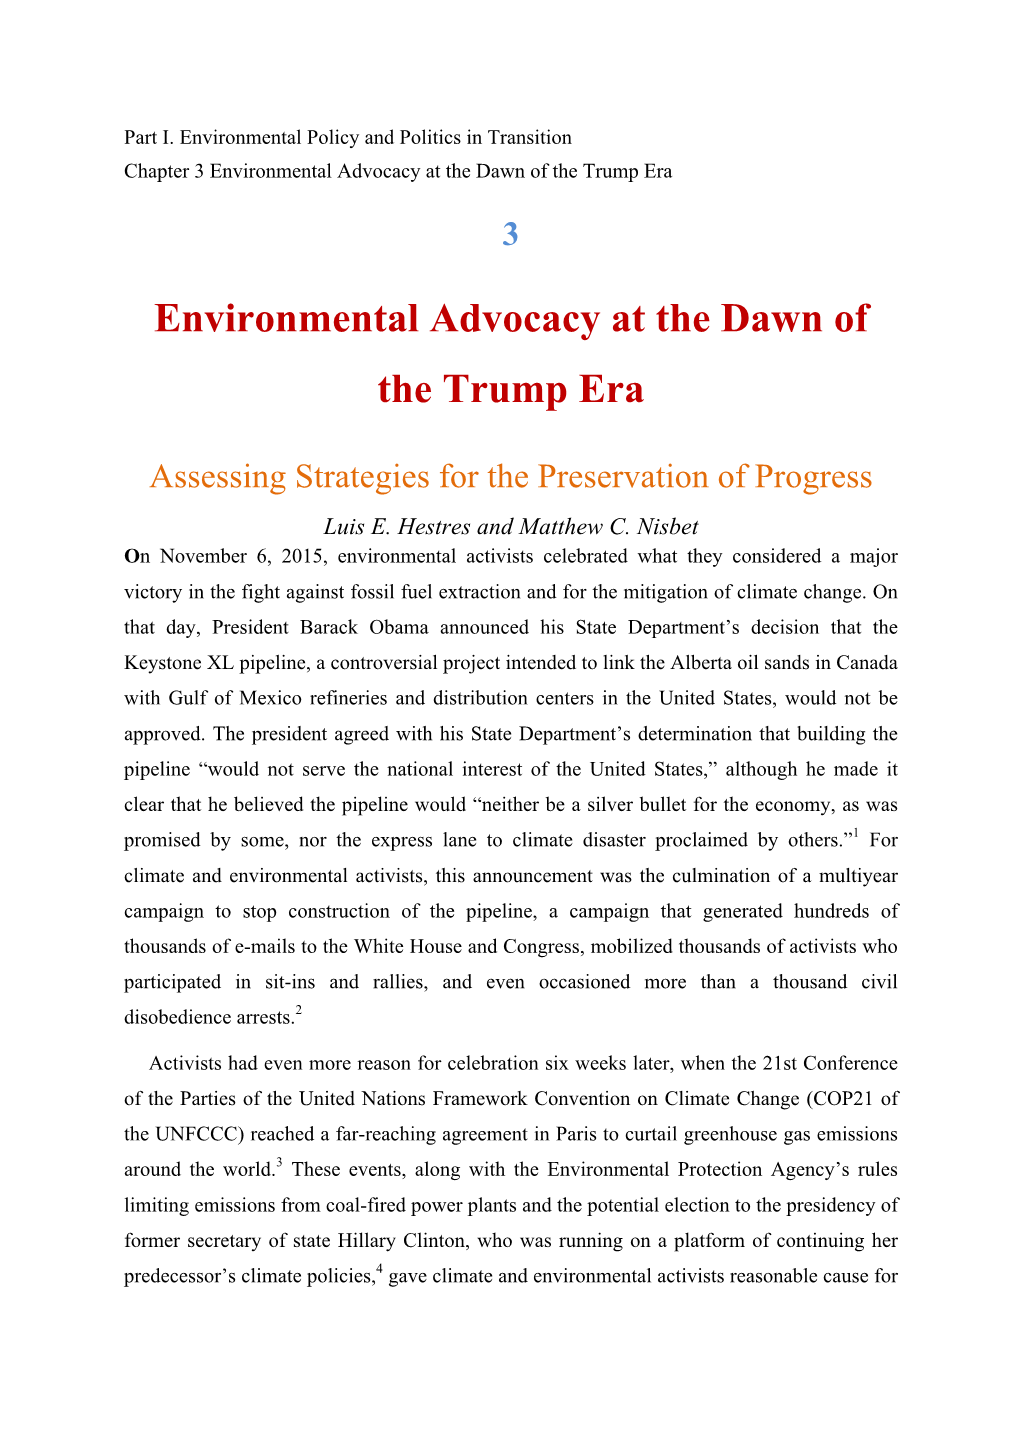 Environmental Advocacy at the Dawn of the Trump Era